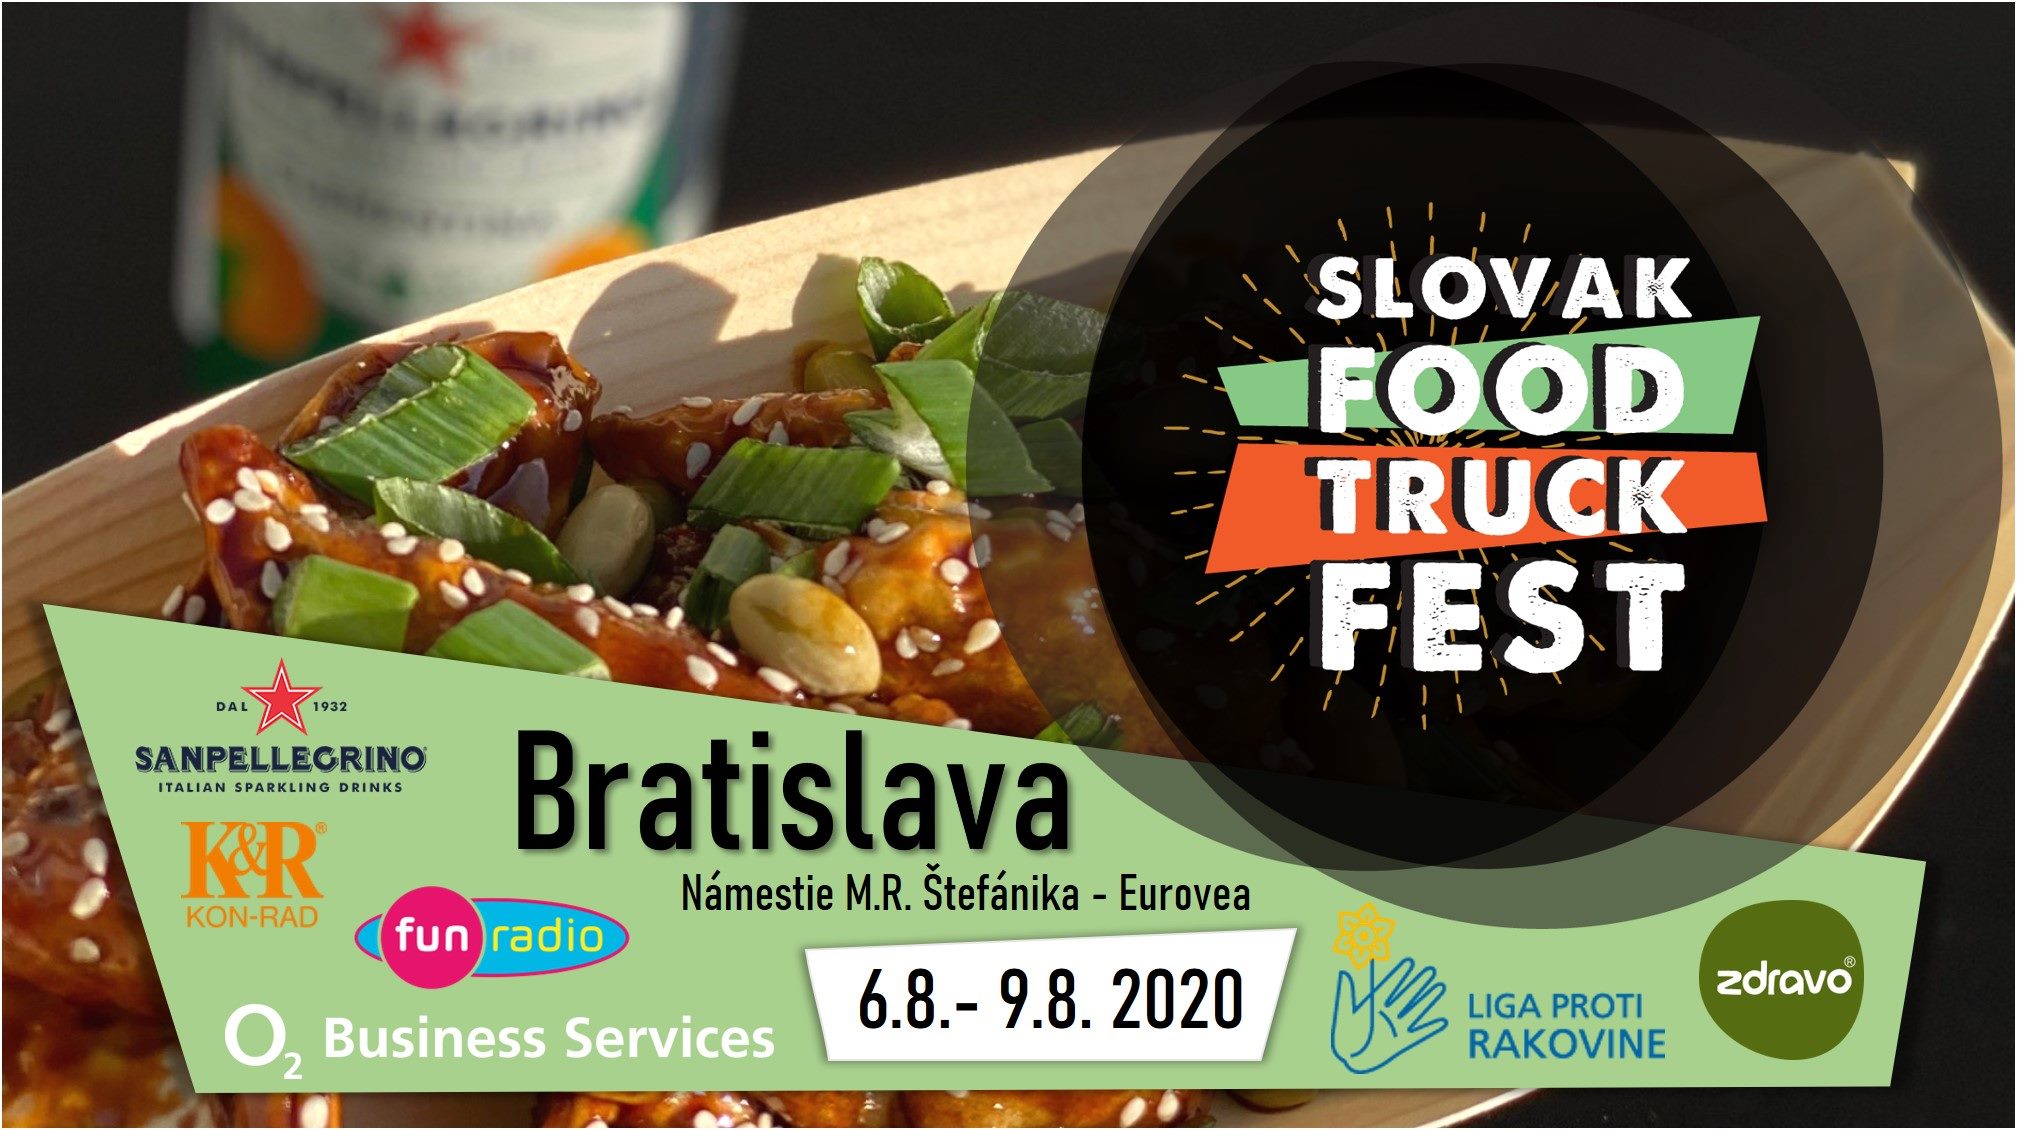 SlovakFoodTruckFest - Bratislava NO.2 Eurovea